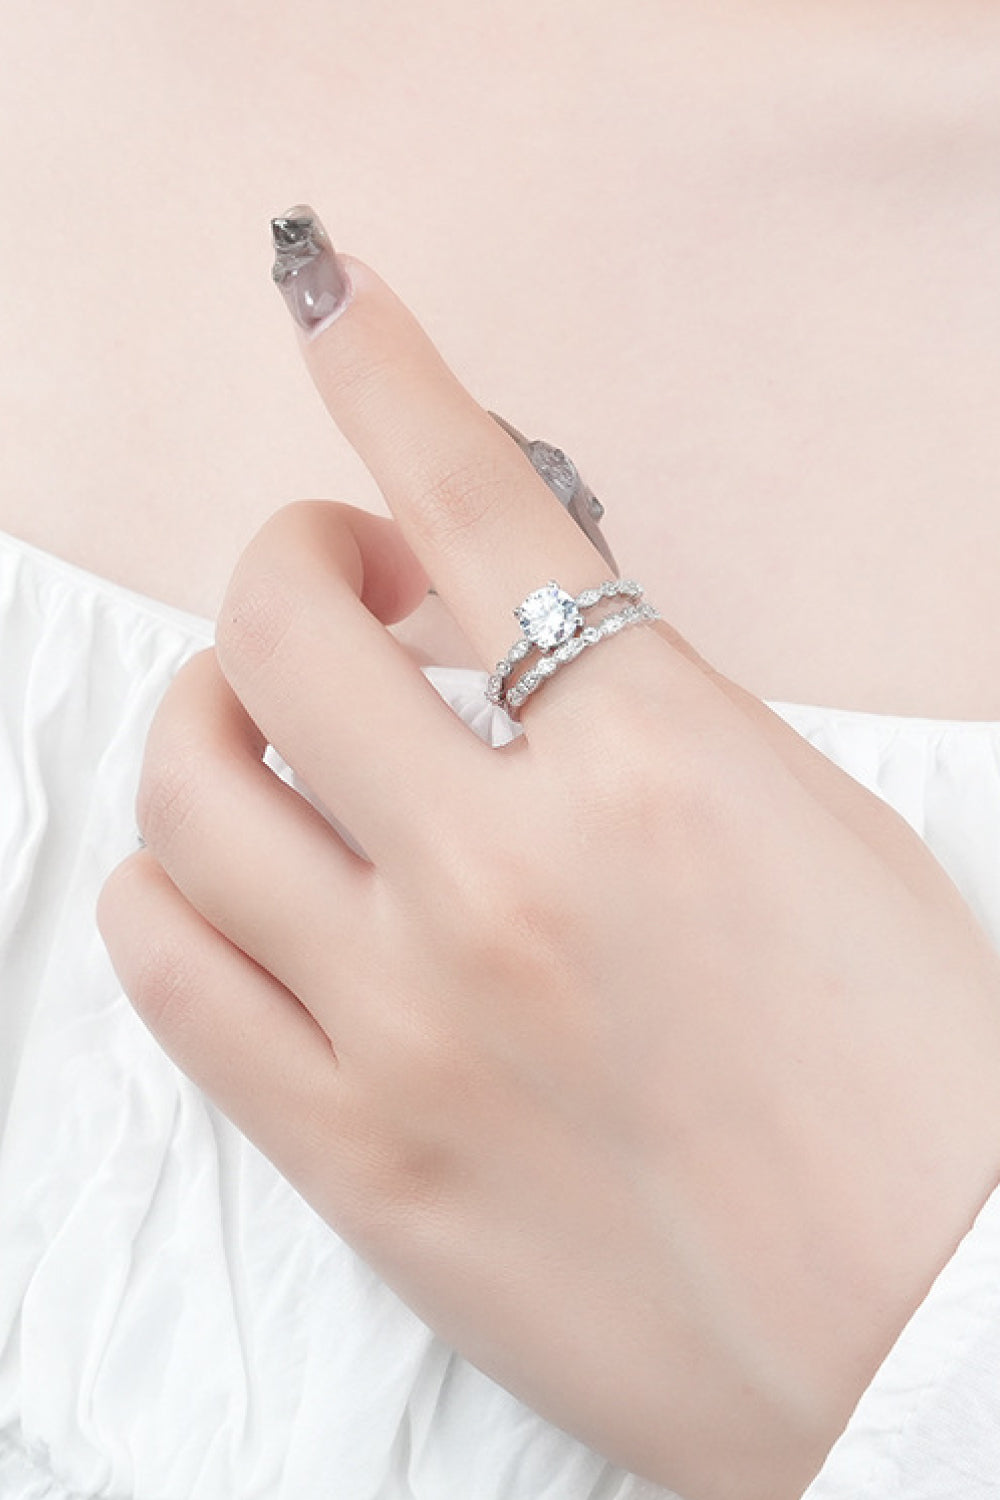 Inlaid Moissanite Ring Image2